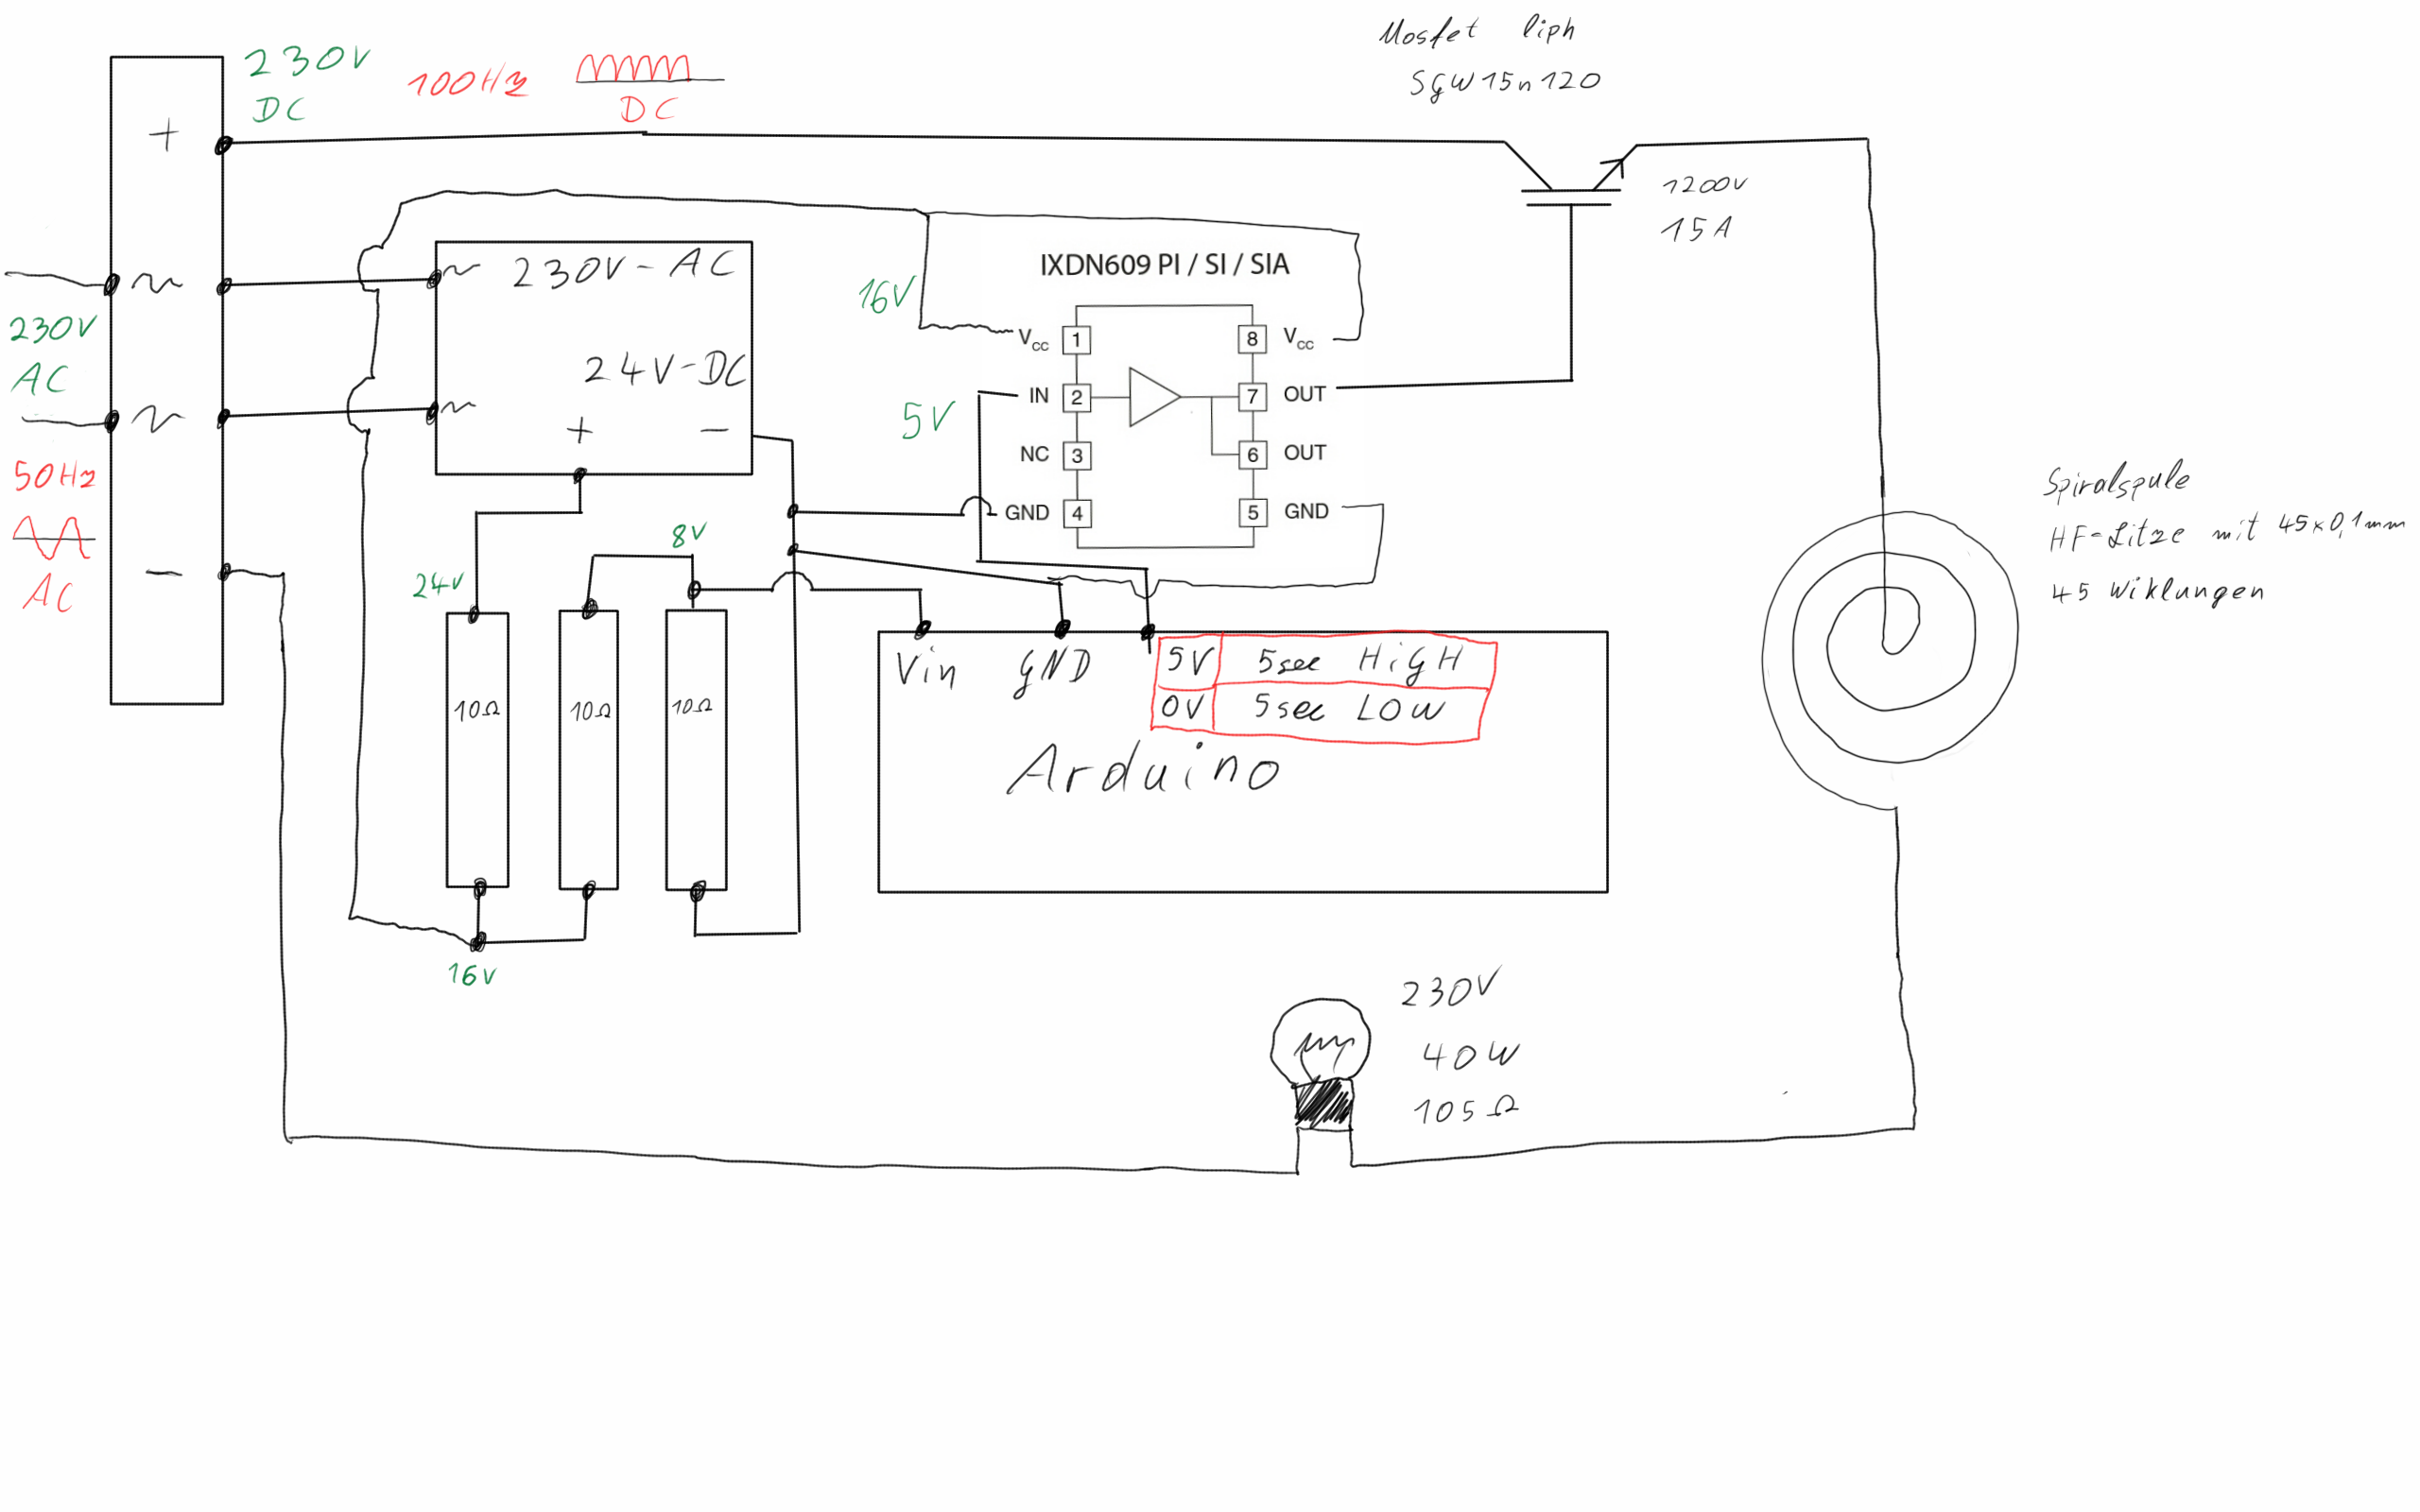 Induktionsherd selber bauen mit IGBT's (problem) - Mikrocontroller.net